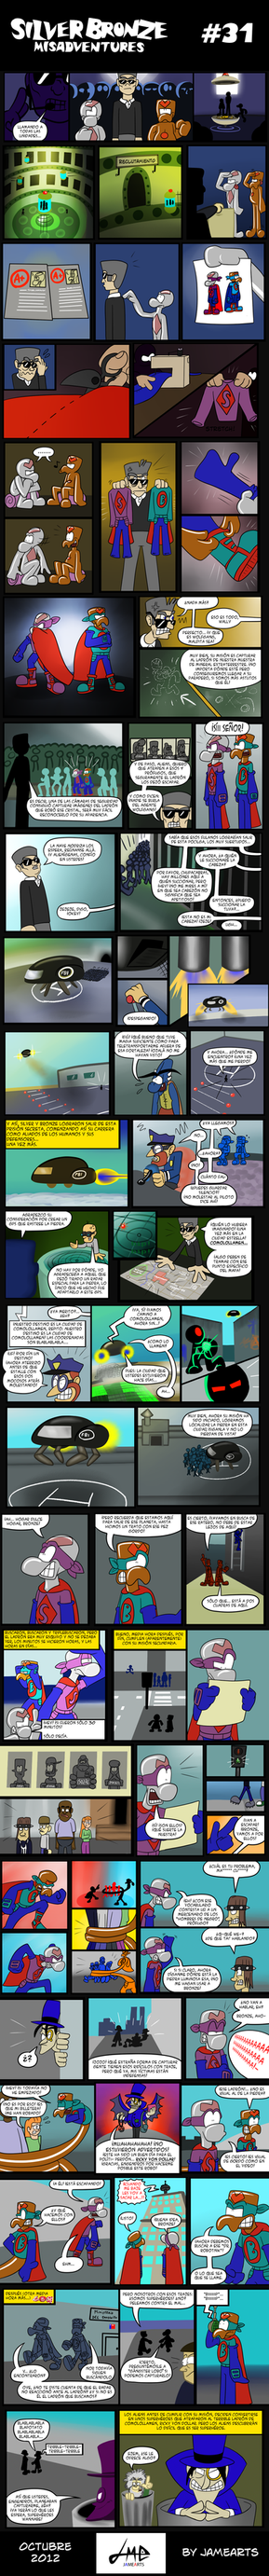 SBMisadventures comic 31 by JAMEArts on DeviantArt